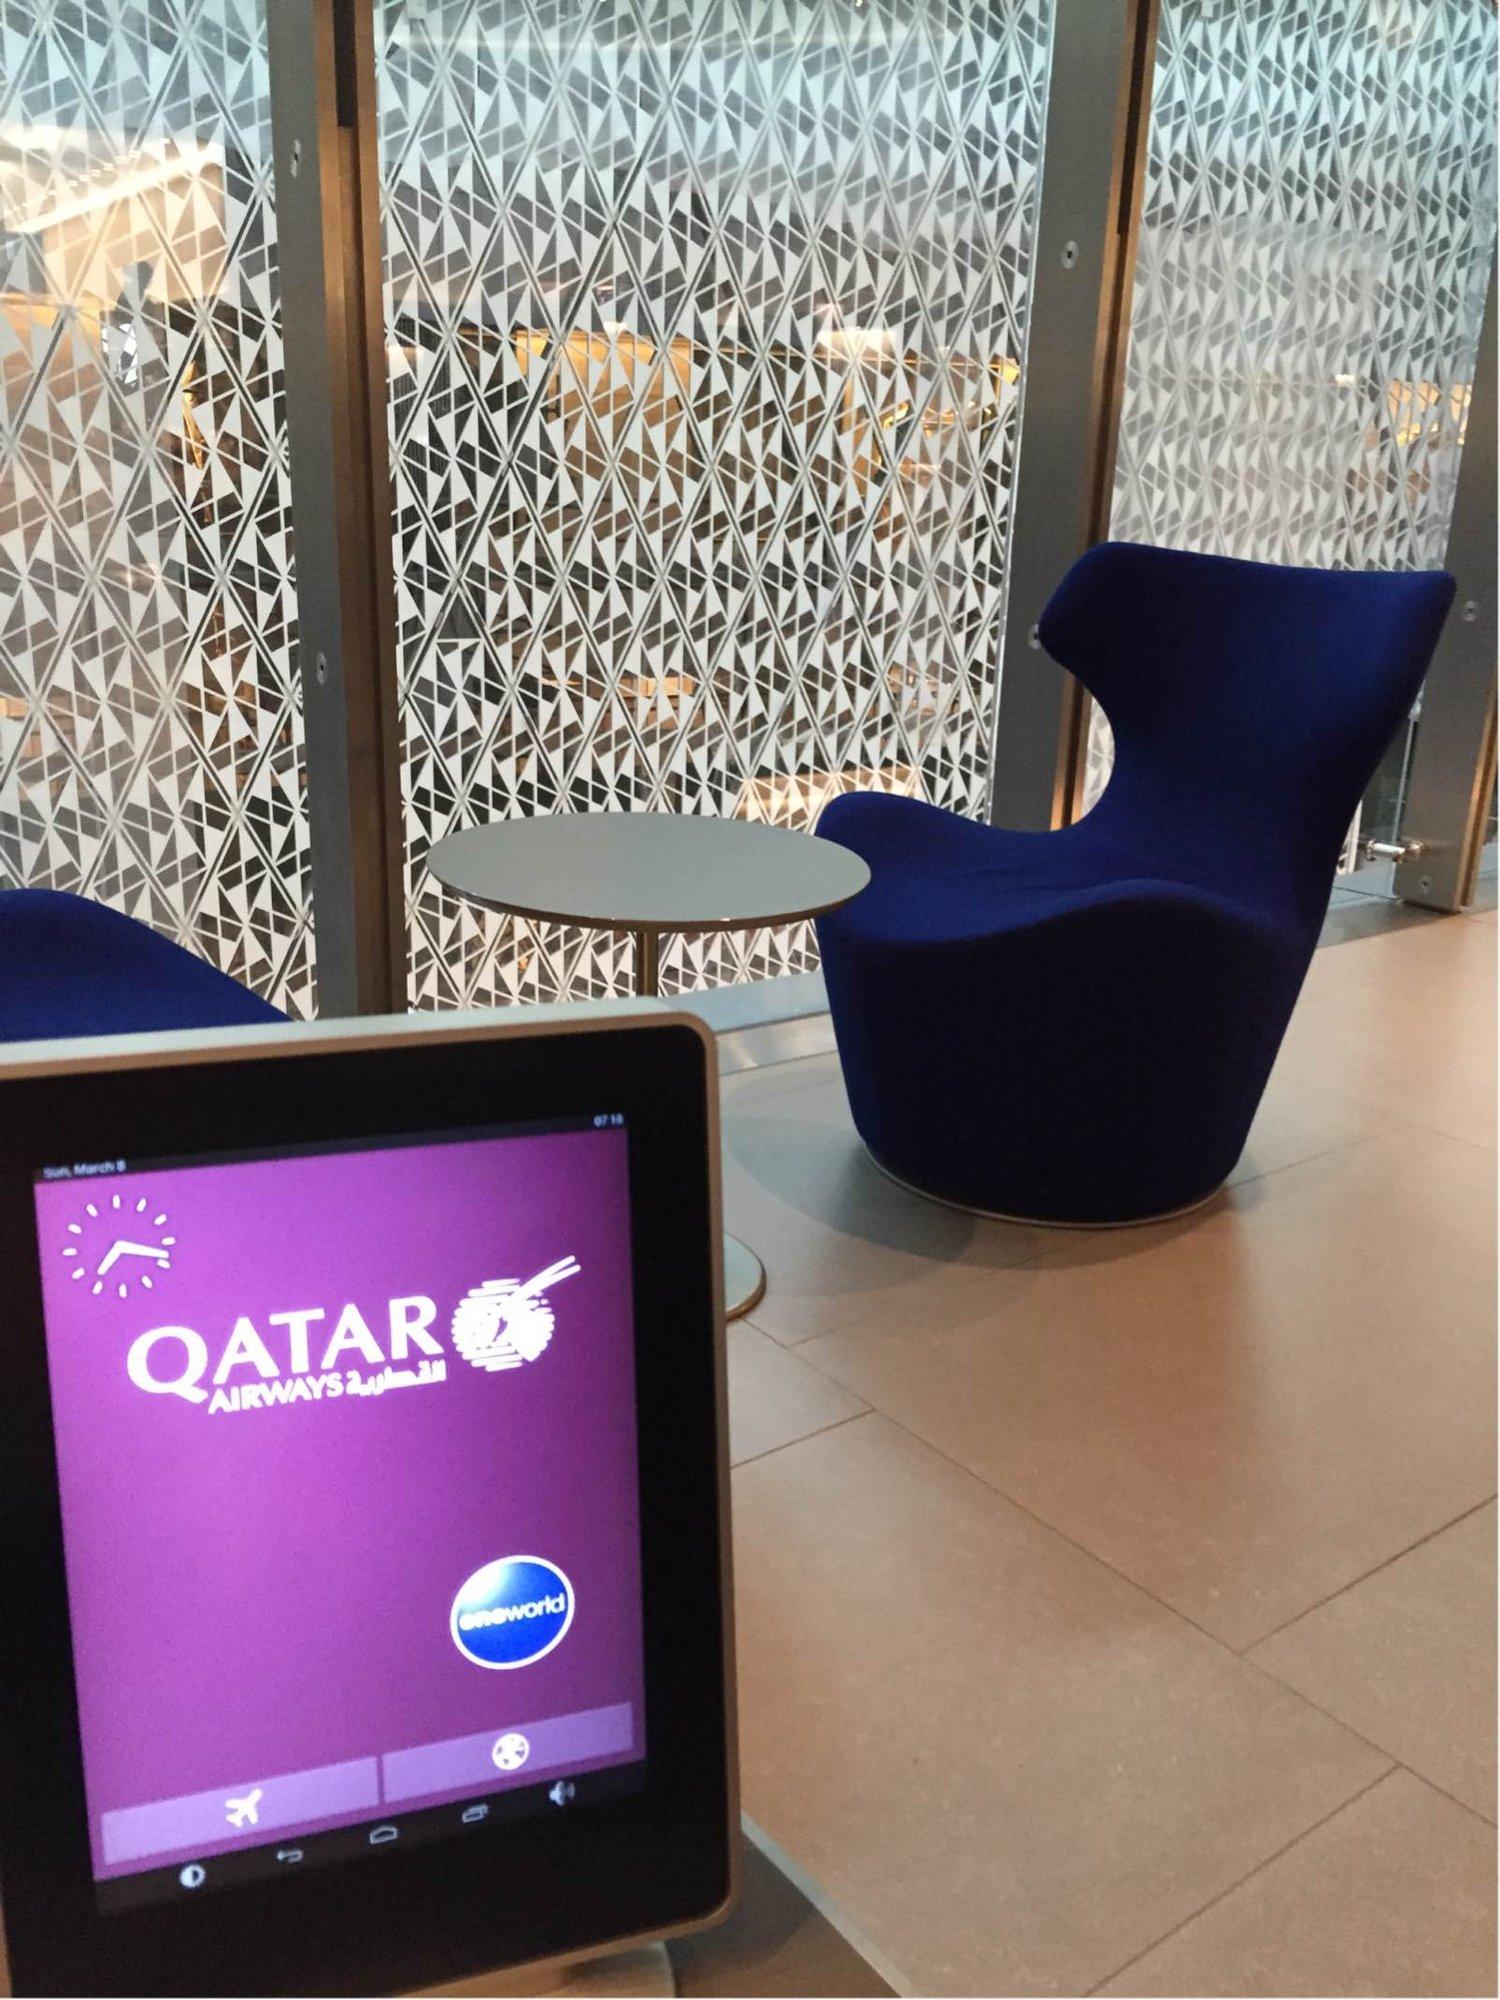 Qatar Airways Al Mourjan Business Class Lounge image 40 of 100